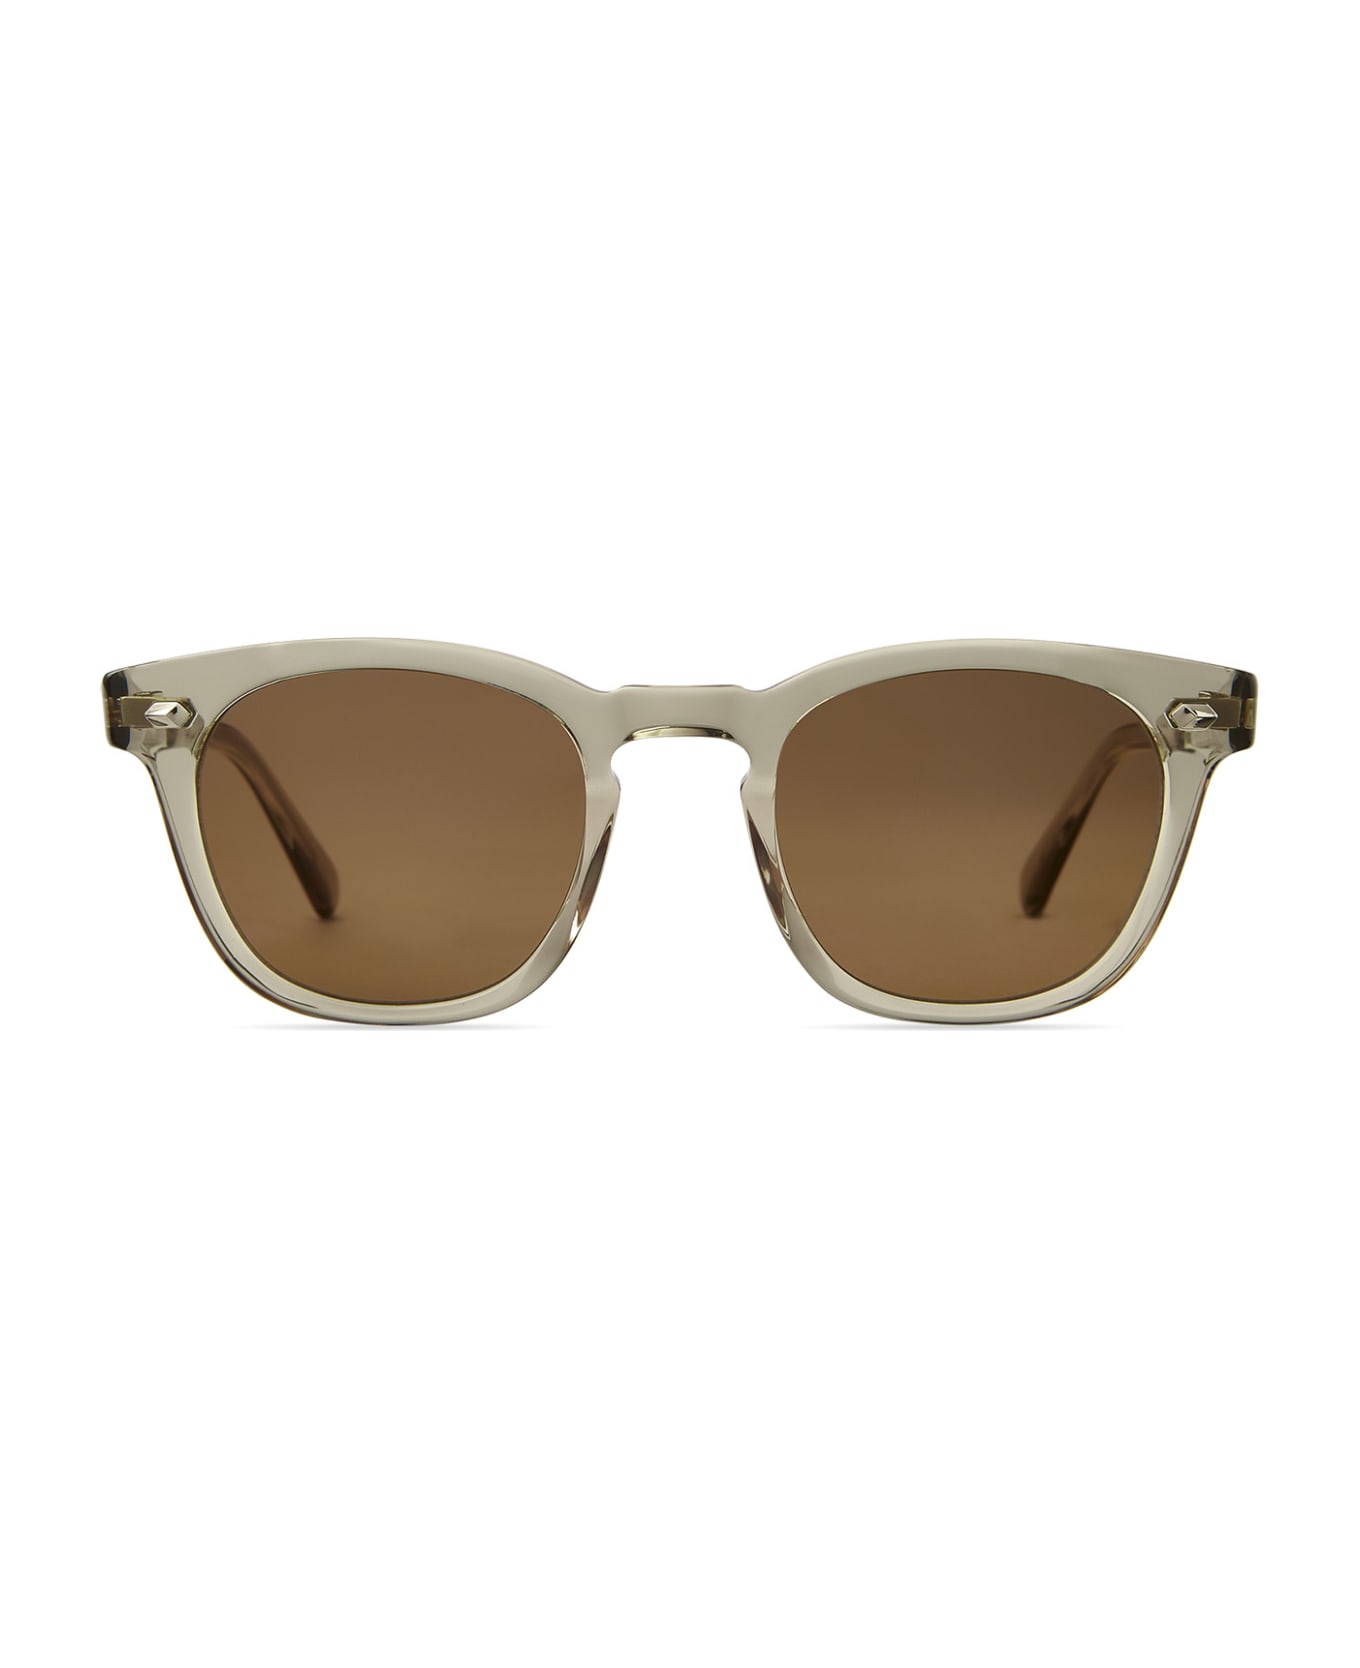 Mr. Leight Hanalei S Olivine-white Gold Sunglasses - Olivine-White Gold